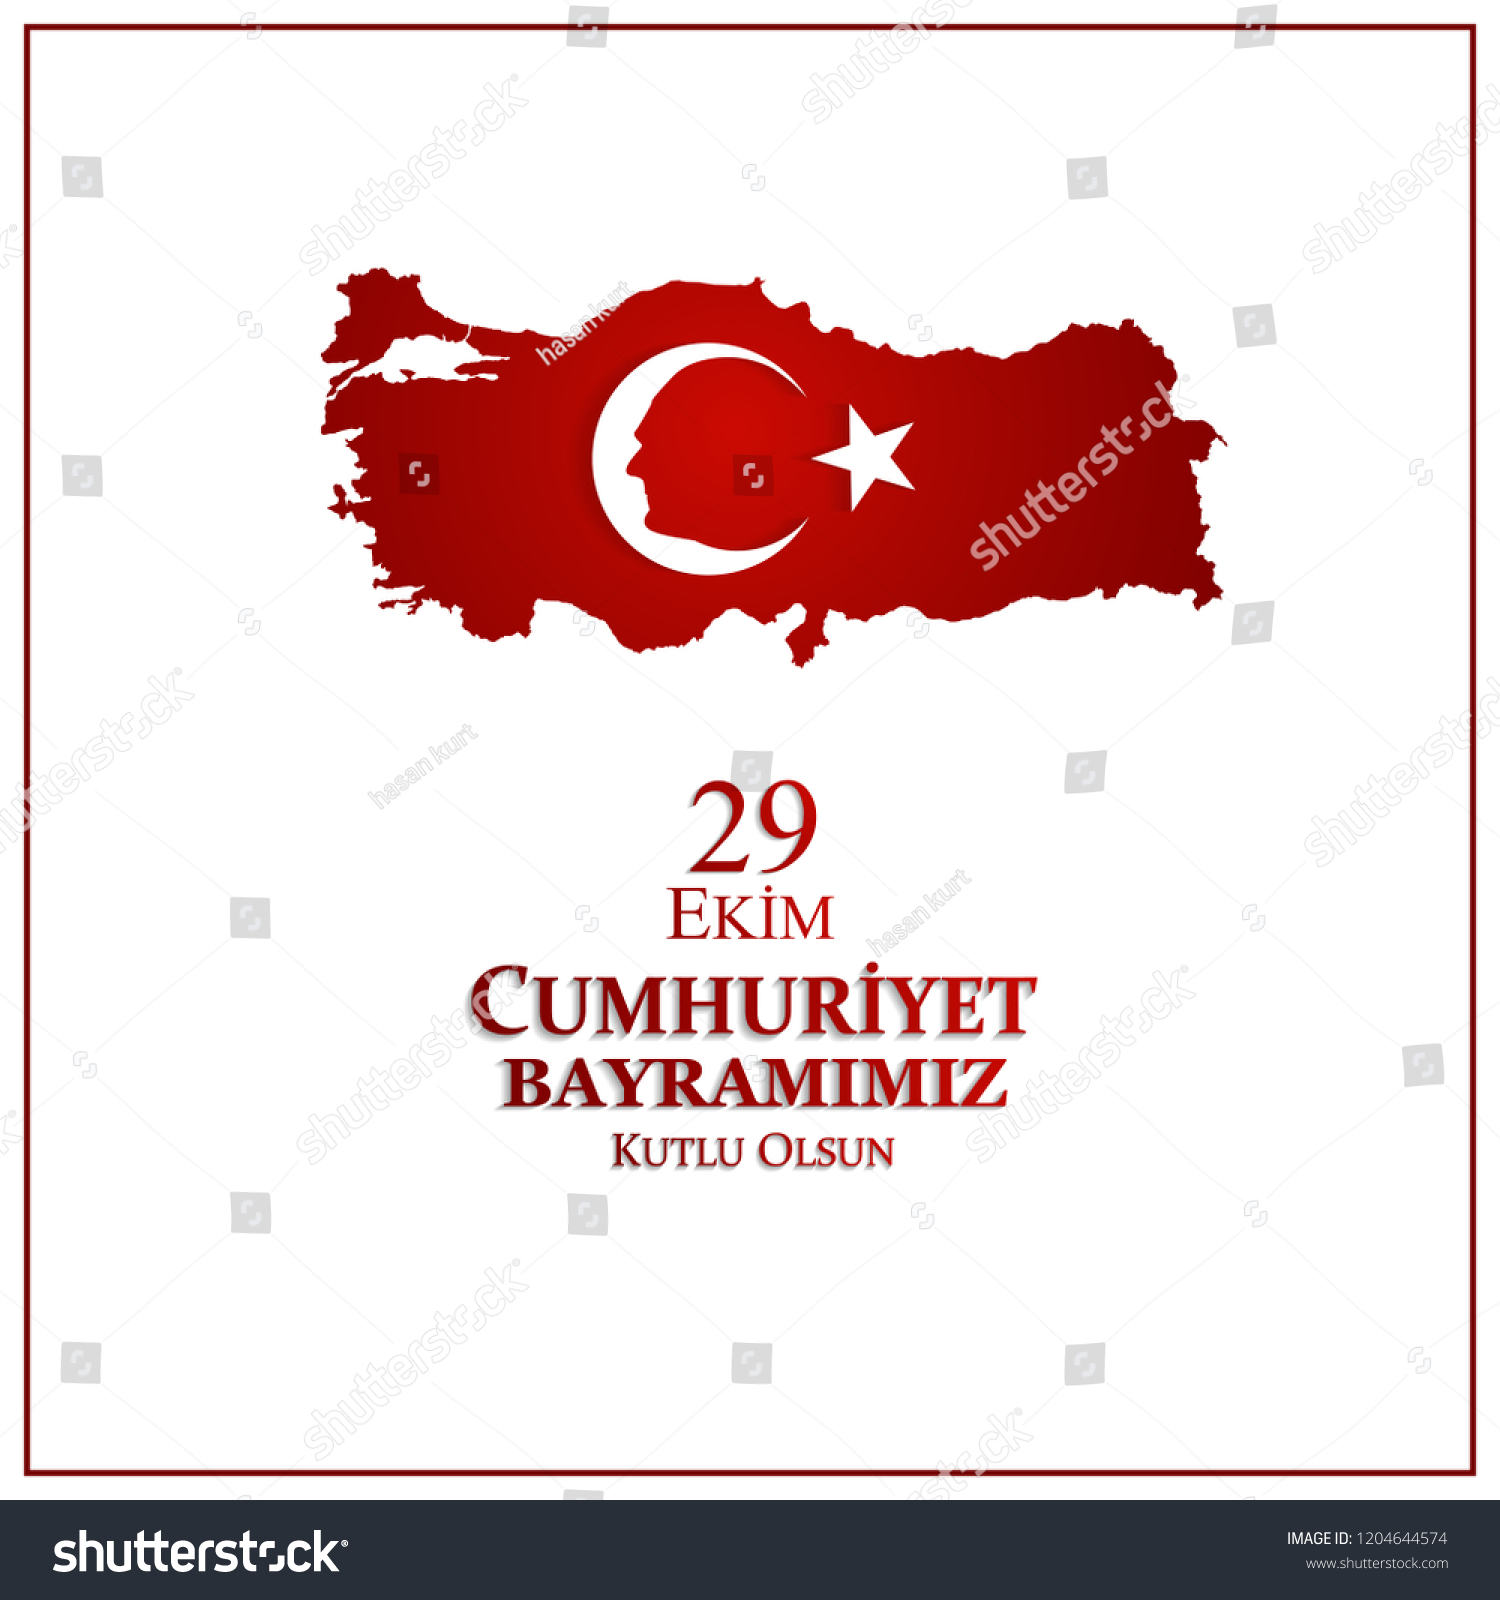 29 Ekim Cumhuriyet Bayrami Day Turkey Royalty Free Stock Vector 1204644574